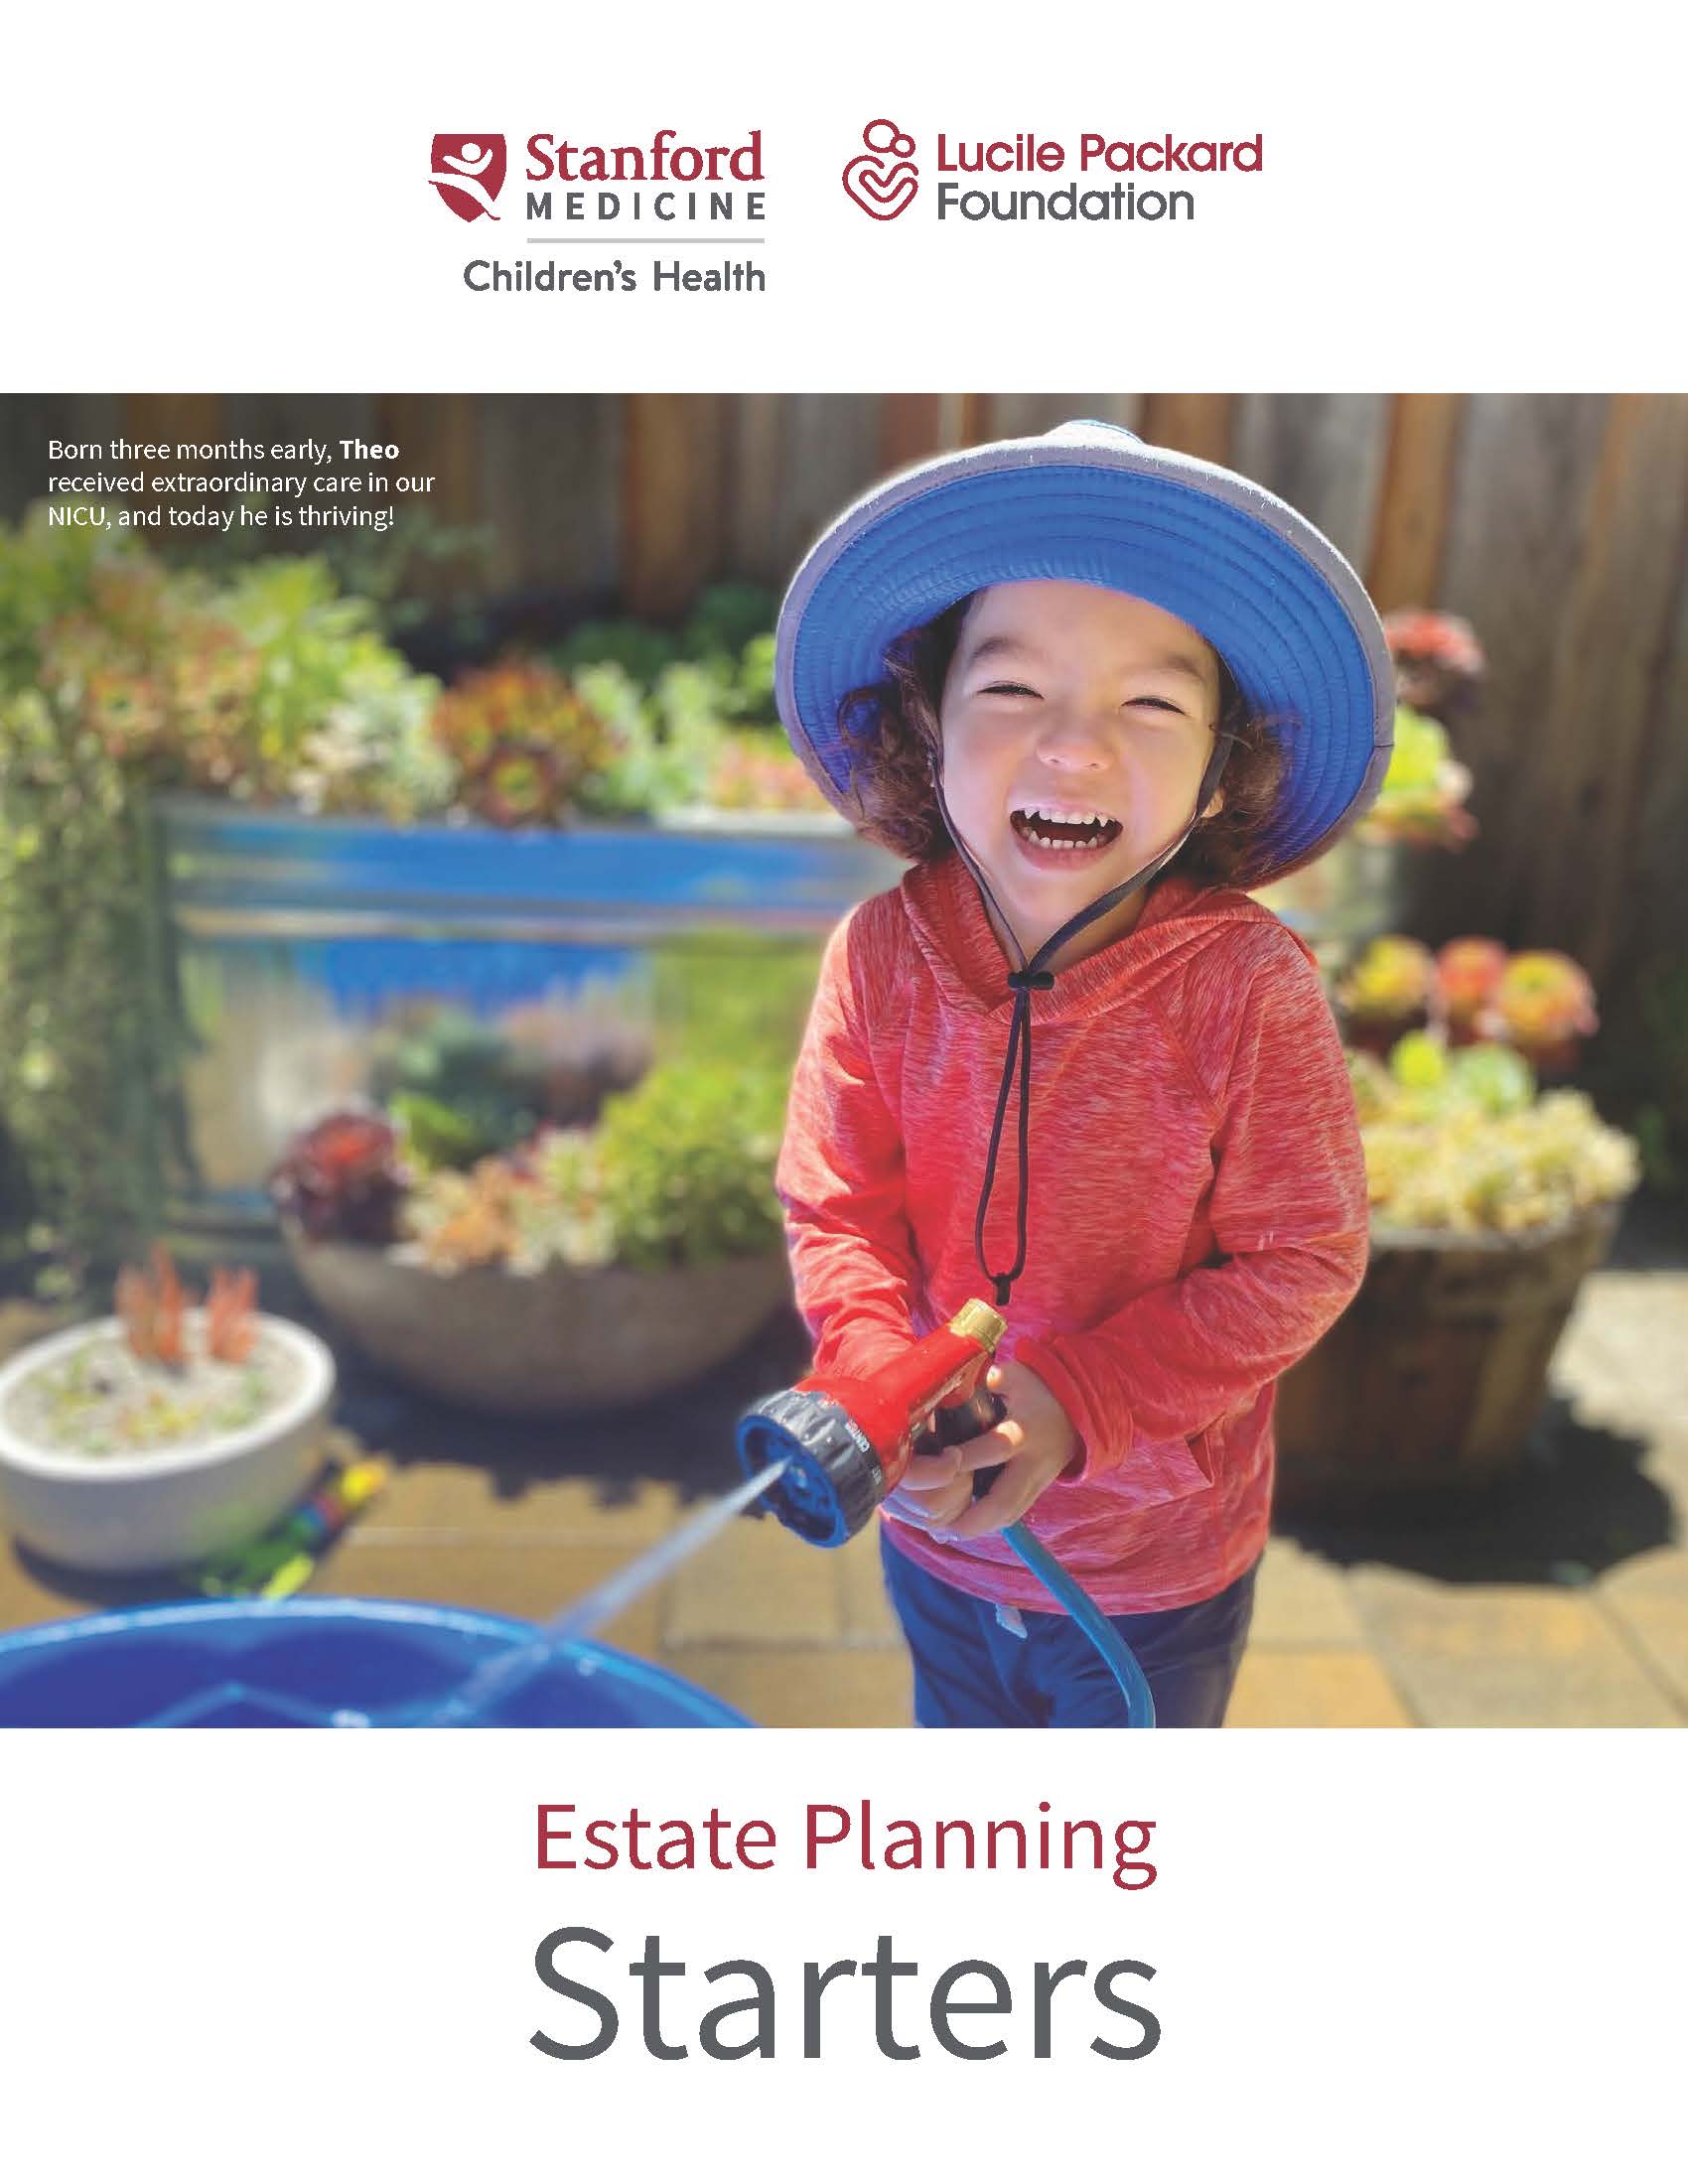 Estate Planning Starters guide